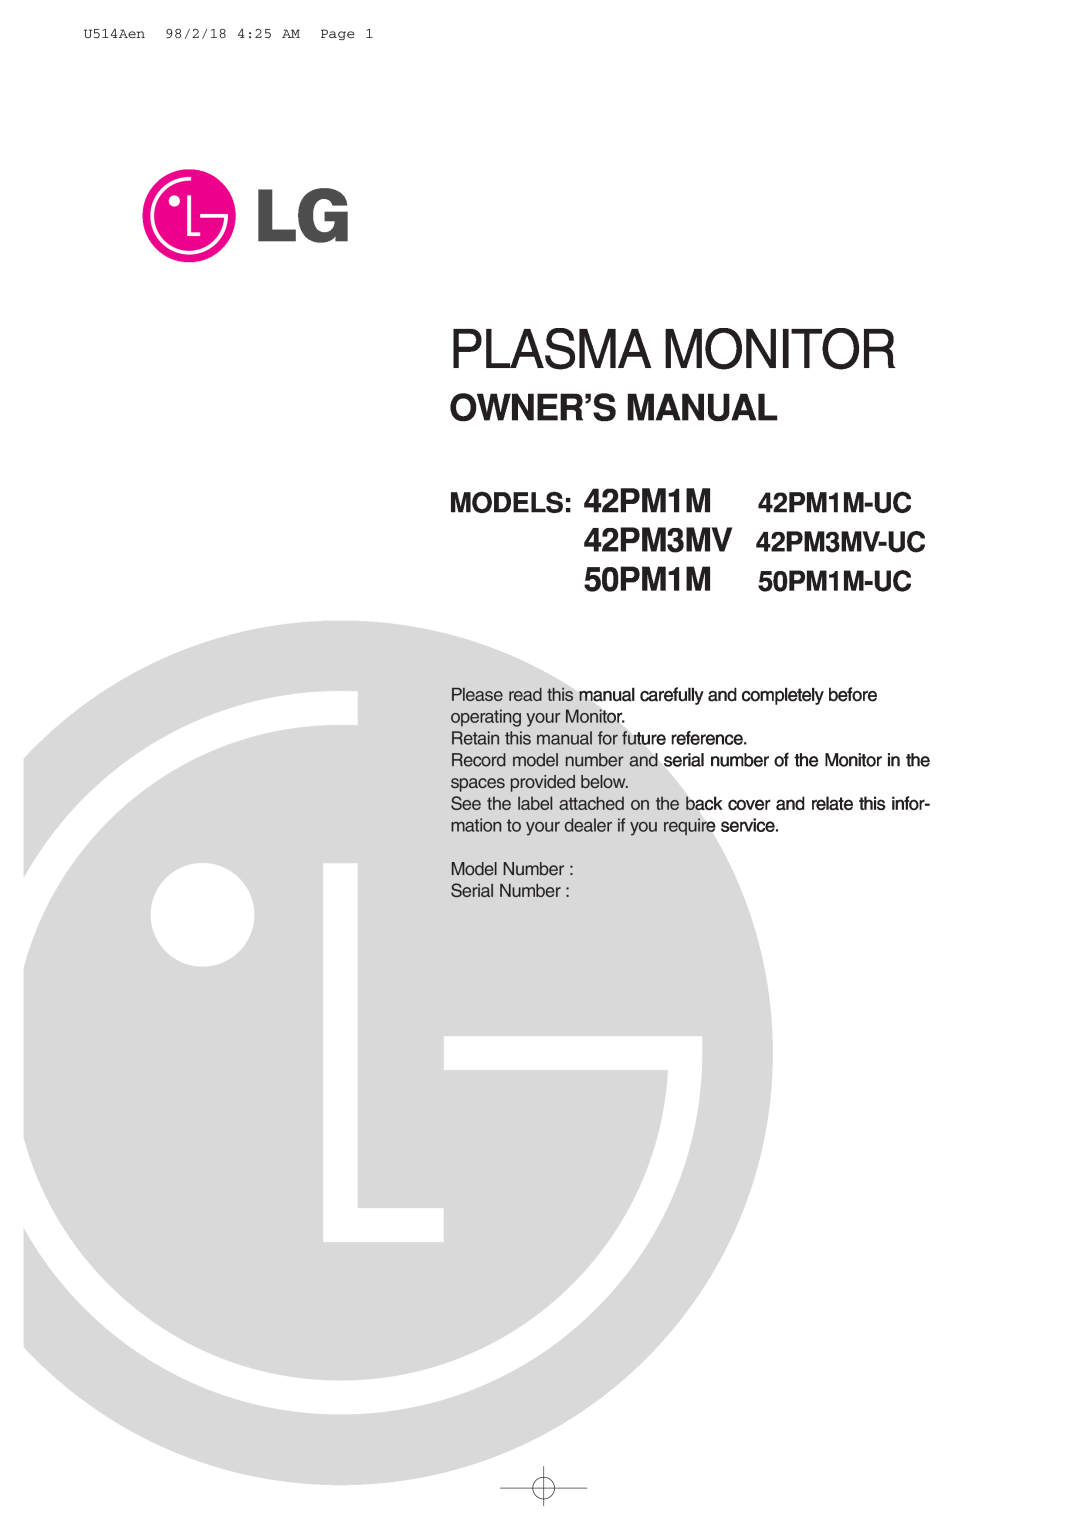 LG Electronics owner manual 42PM3MV 50PM1M, Plasma Monitor, Owner’S Manual, MODELS 42PM1M 